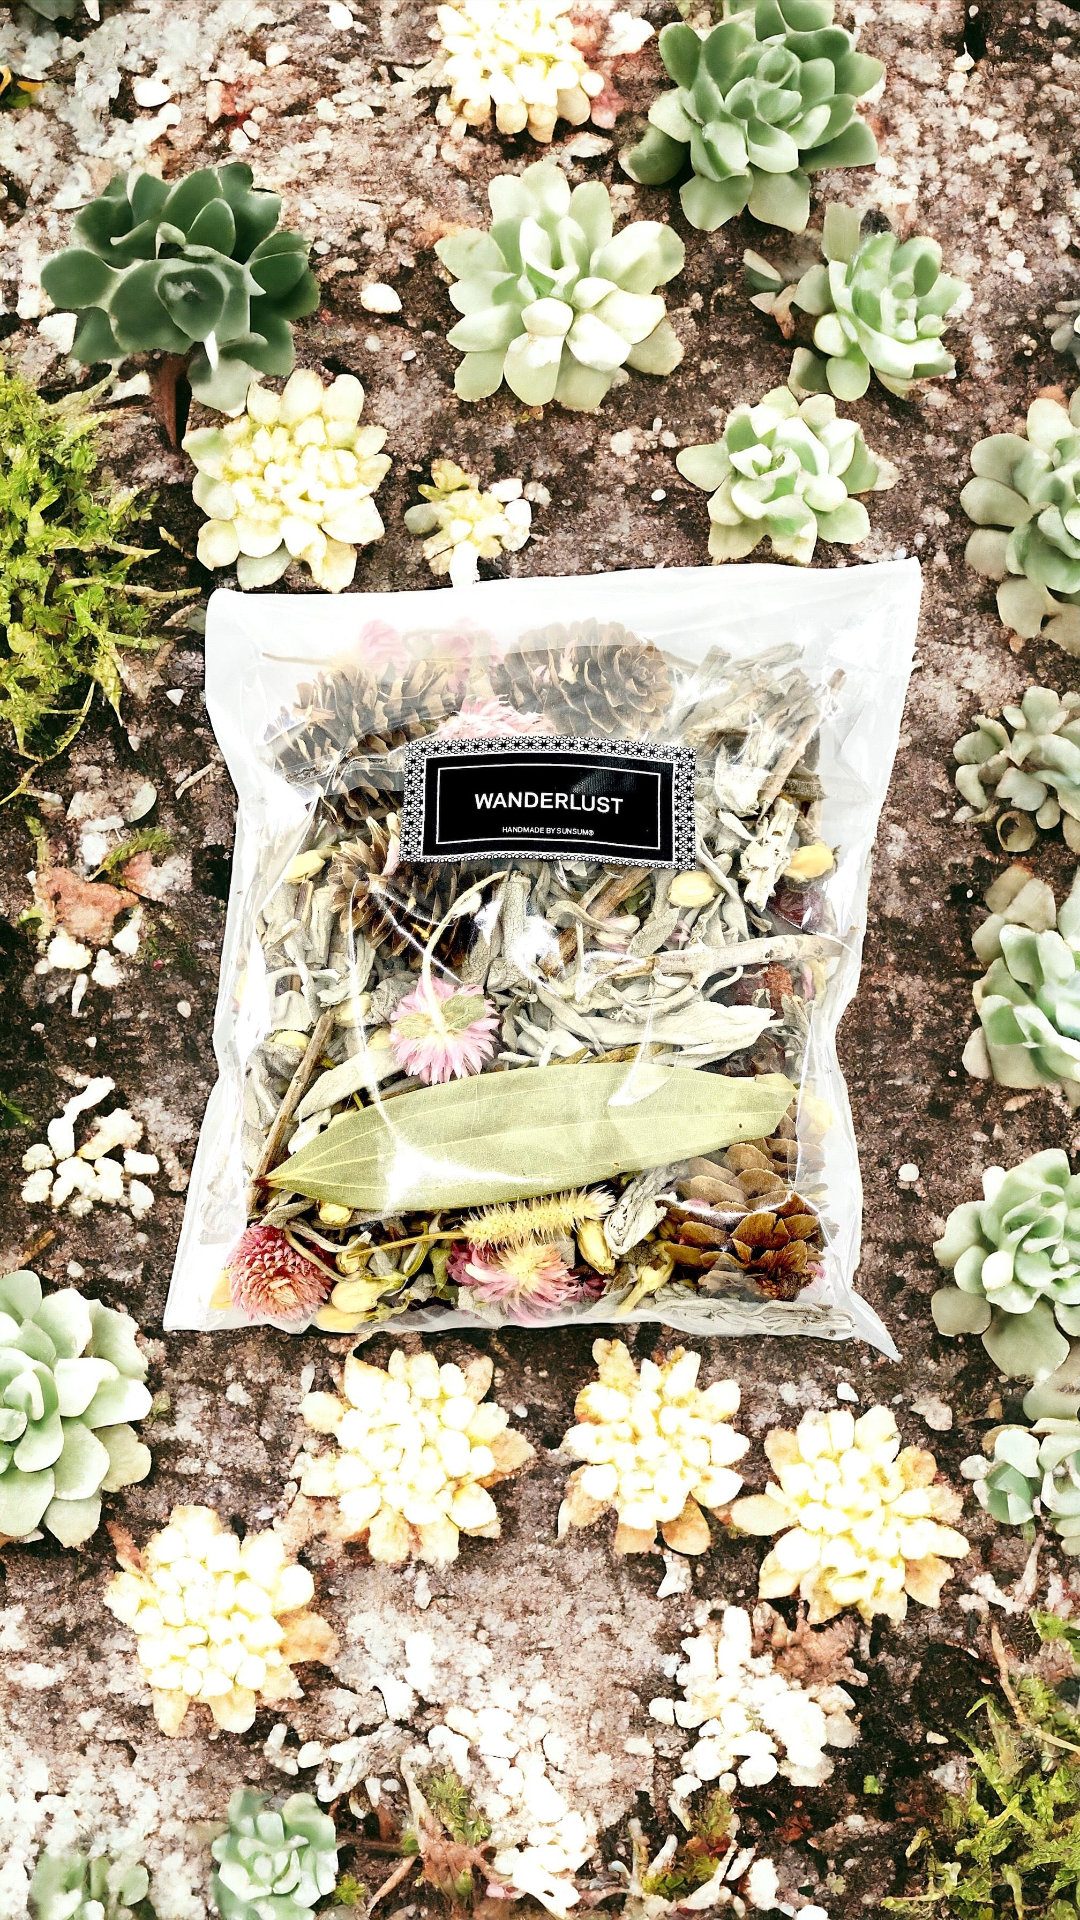 Wanderlust, Wildflower & Sage Loose Dried Flowers - Naturally Scented Flower Confetti Potpourri - 2 oz